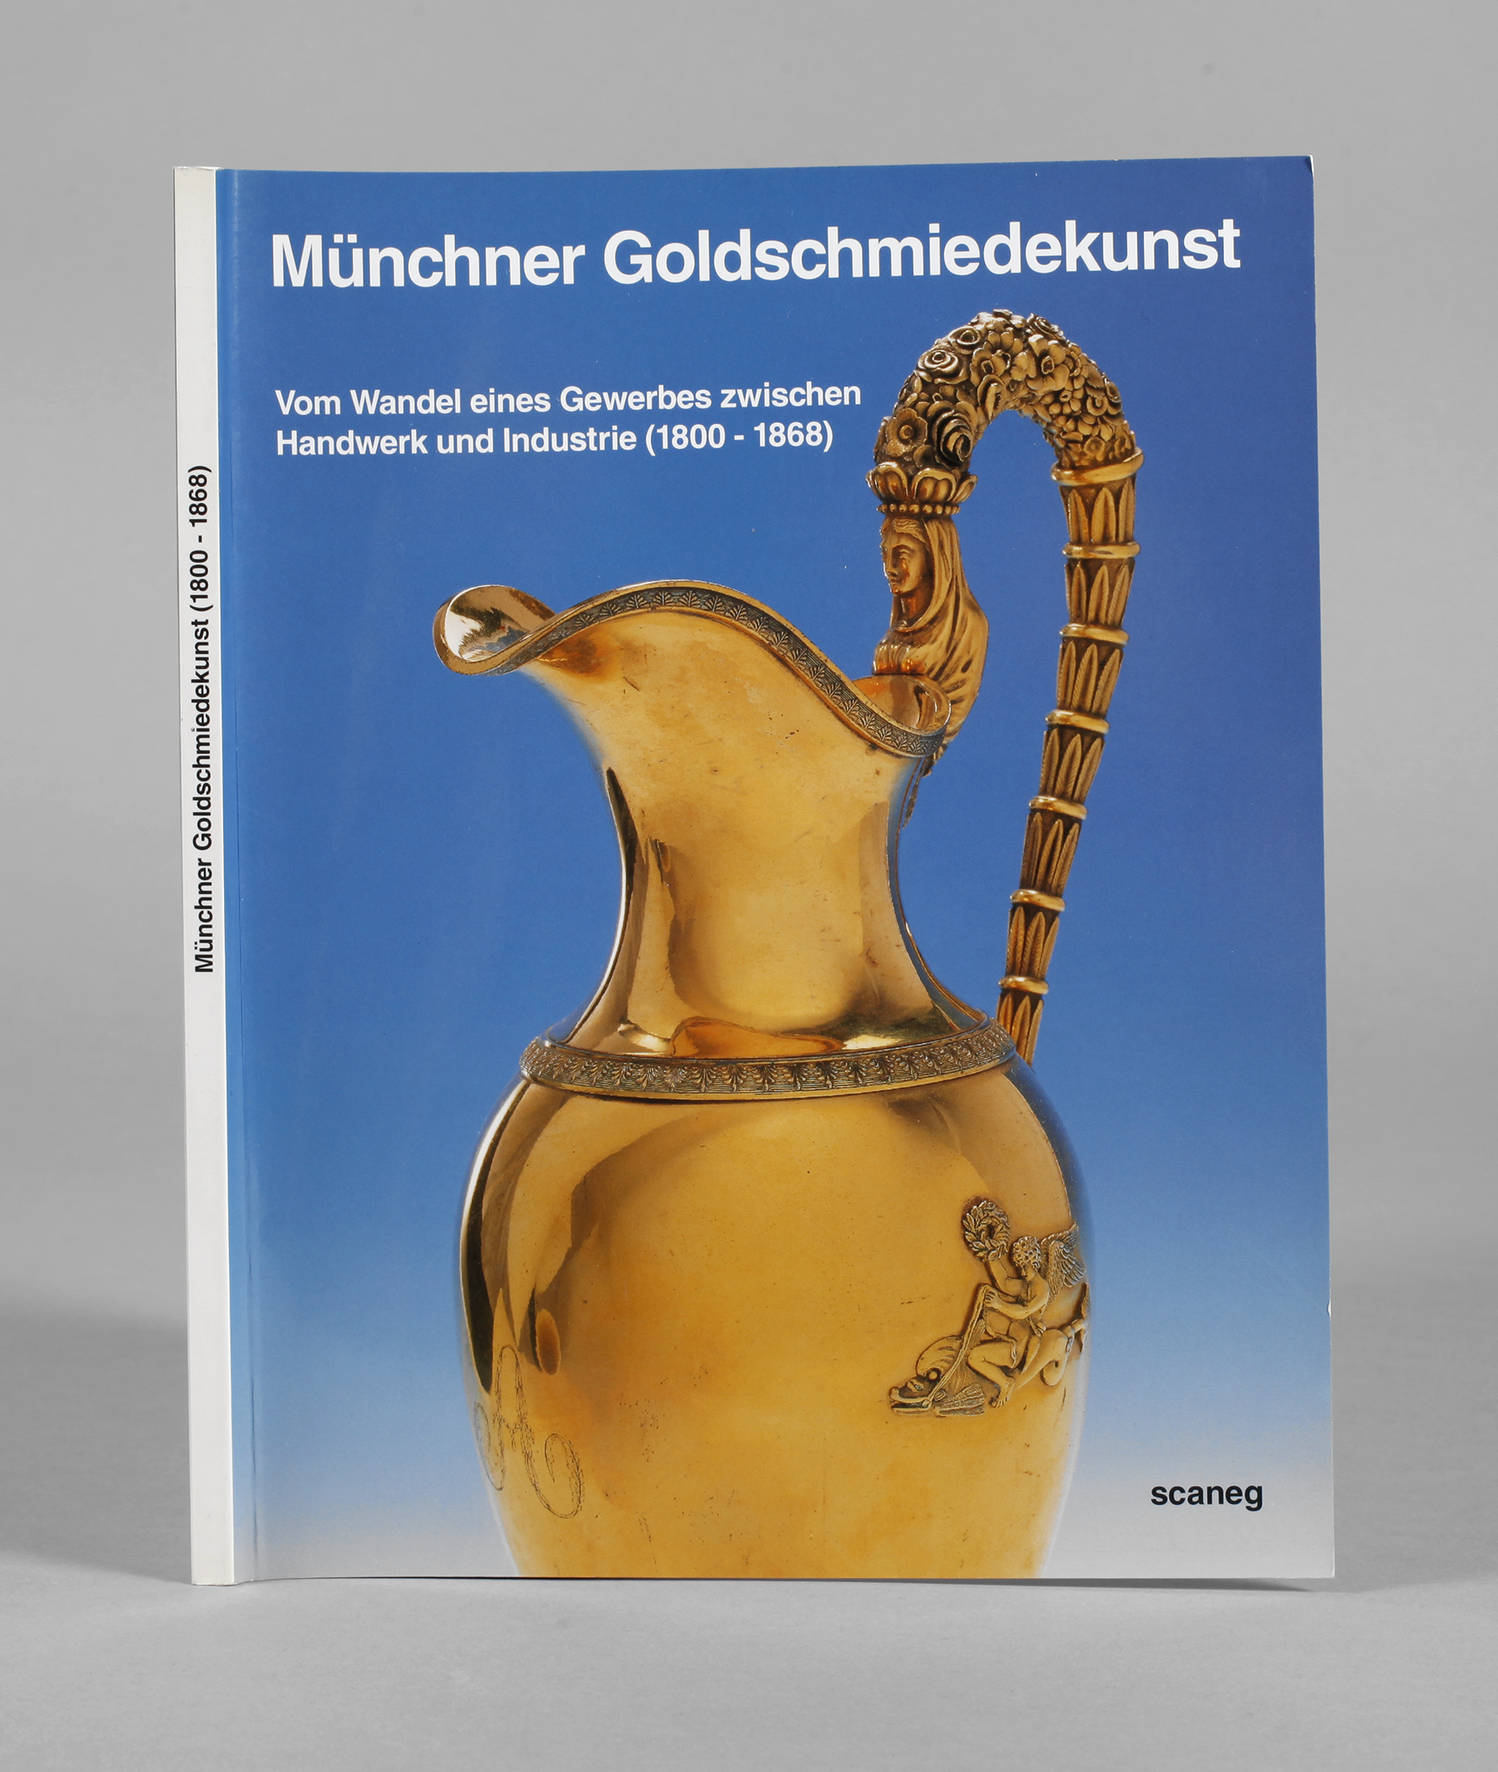 Münchner Goldschmiedekunst